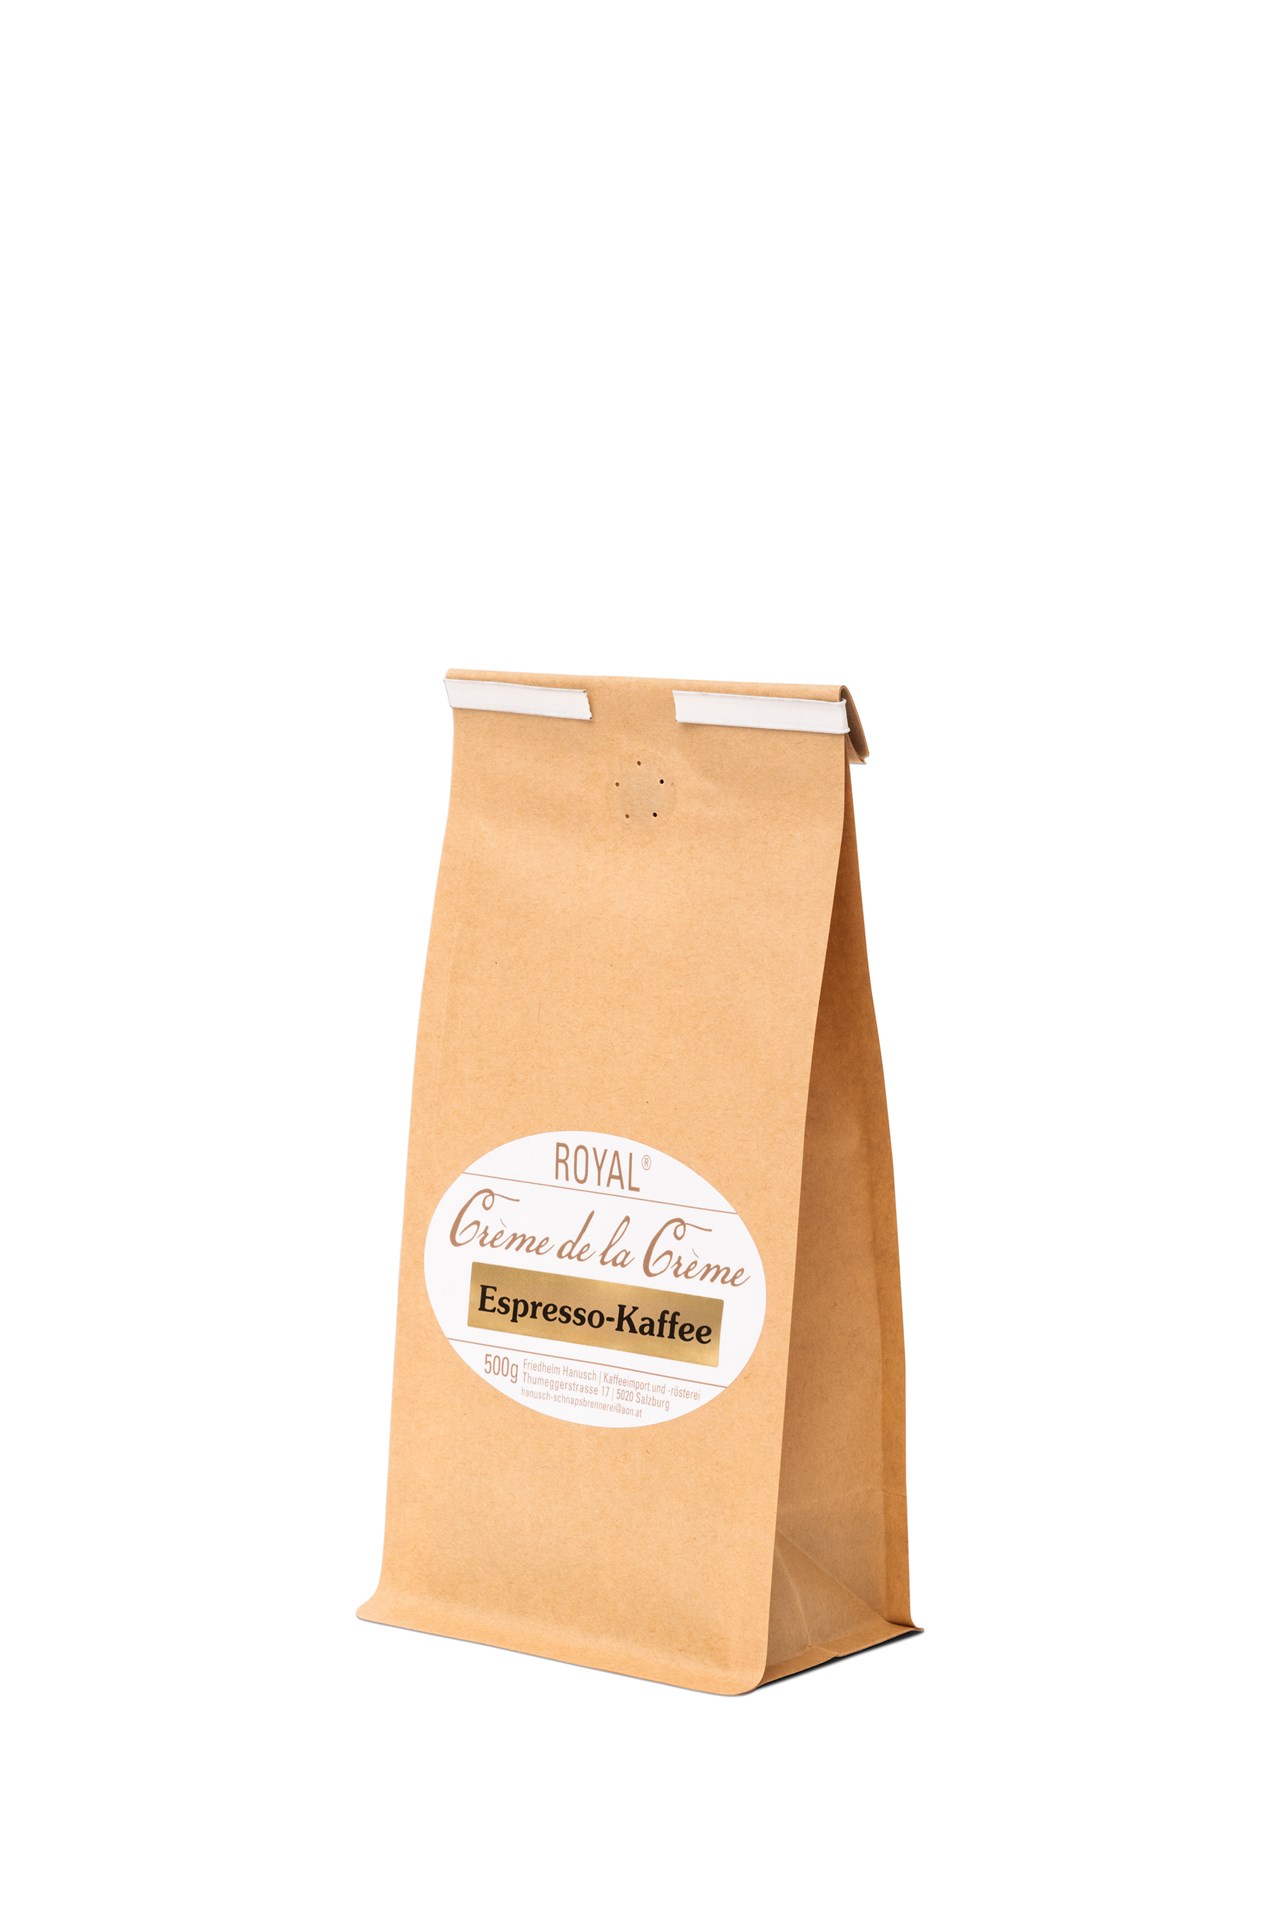 Destillerie & Kaffeerösterei Hanusch Produkt-Beispiele Royal Crème de la Crème 